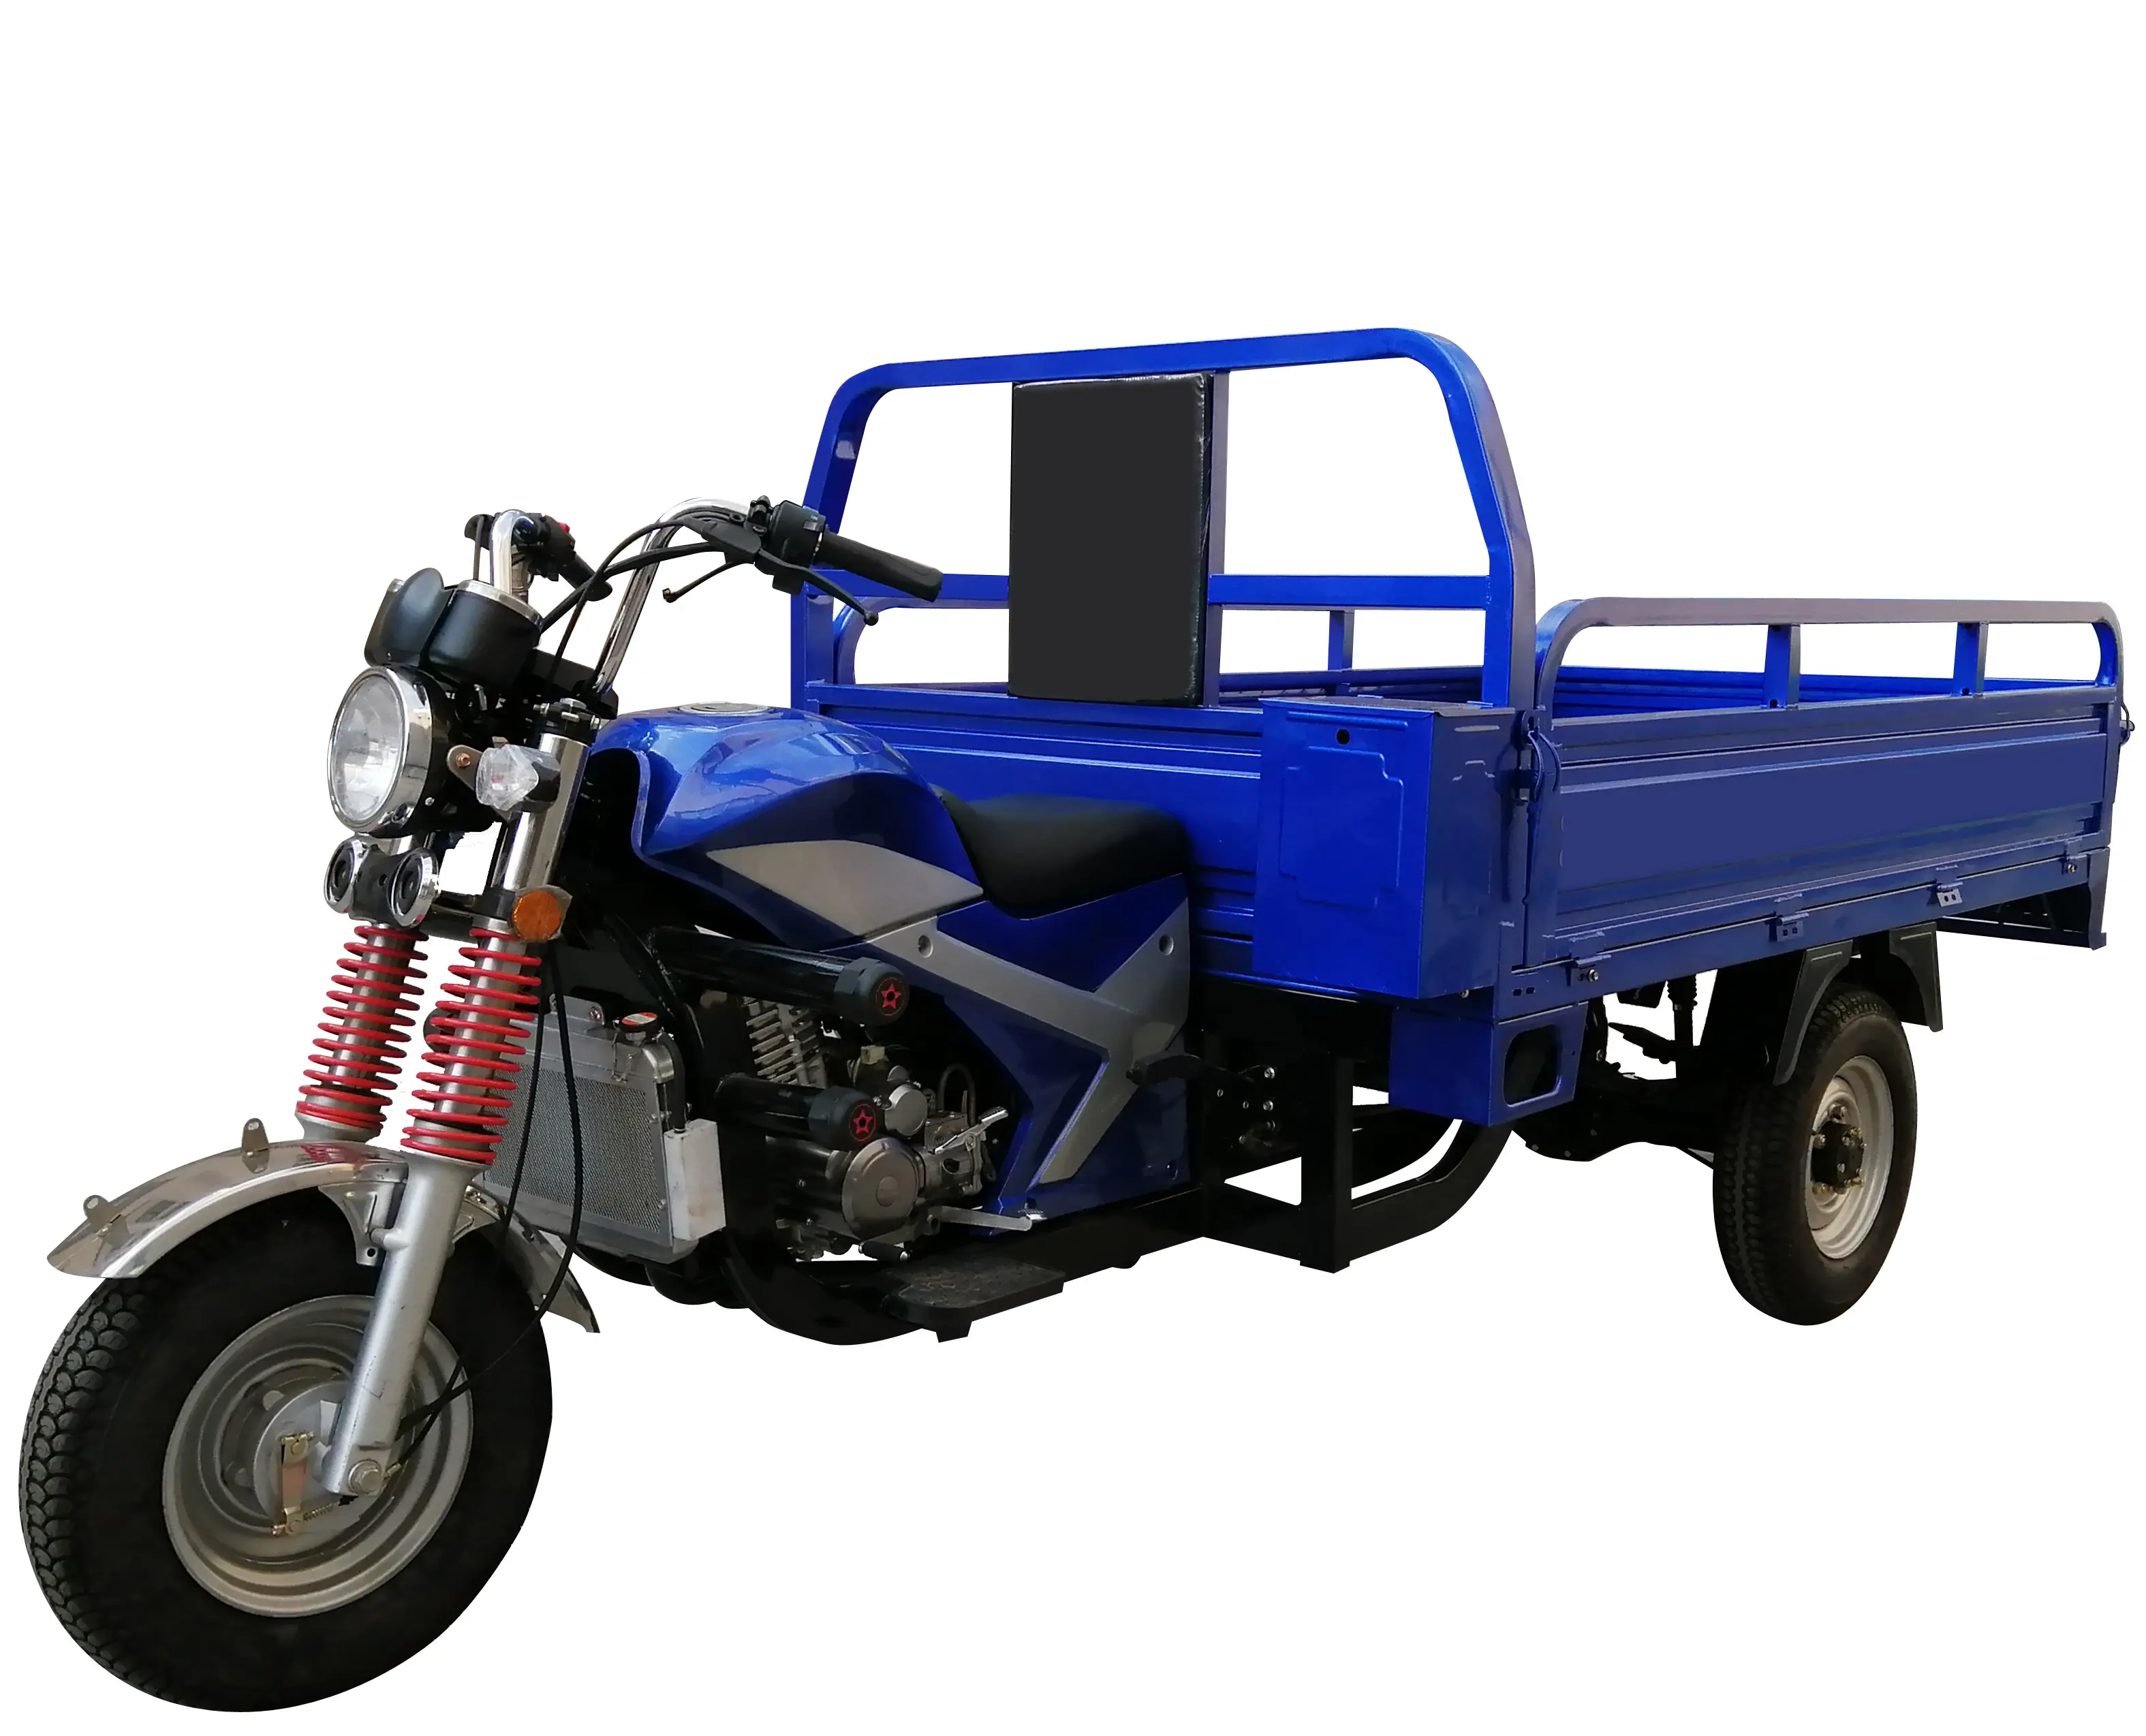 Triciclo motorizado de 3 ruedas refrigerado por agua, triciclo de carga motorizada de alta calidad